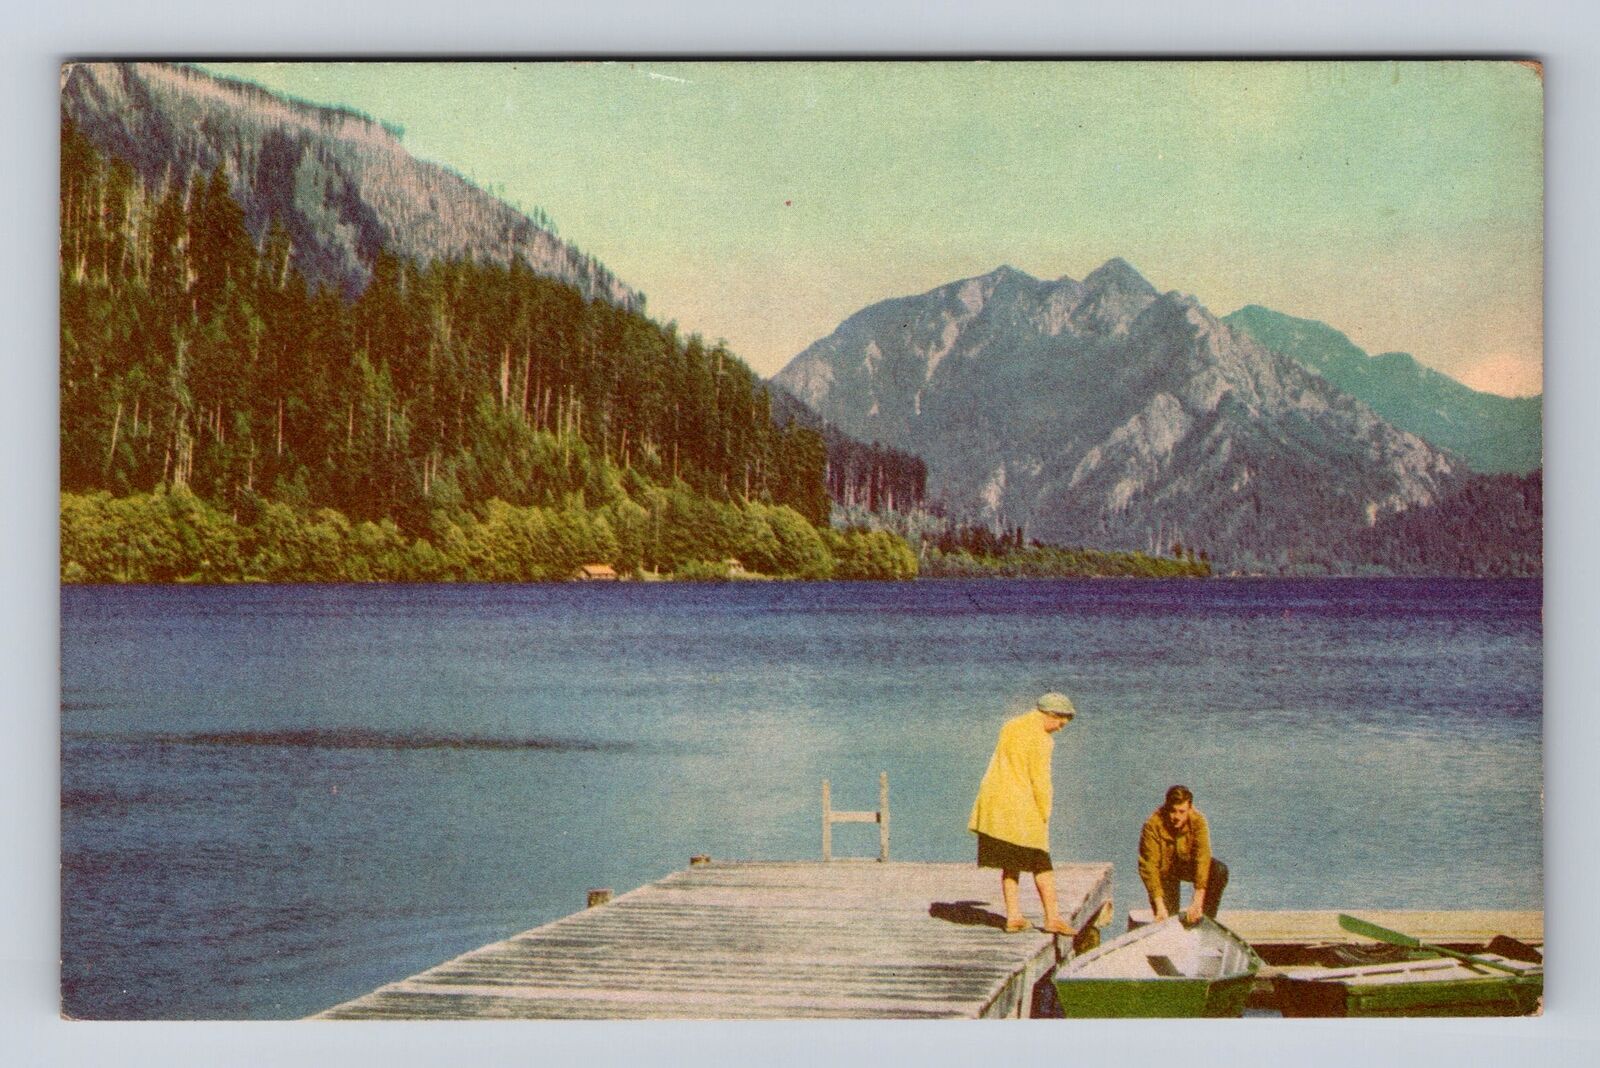 Olympic National Park-Lake Crescent Scenic View, Vintage Souvenir Postcard